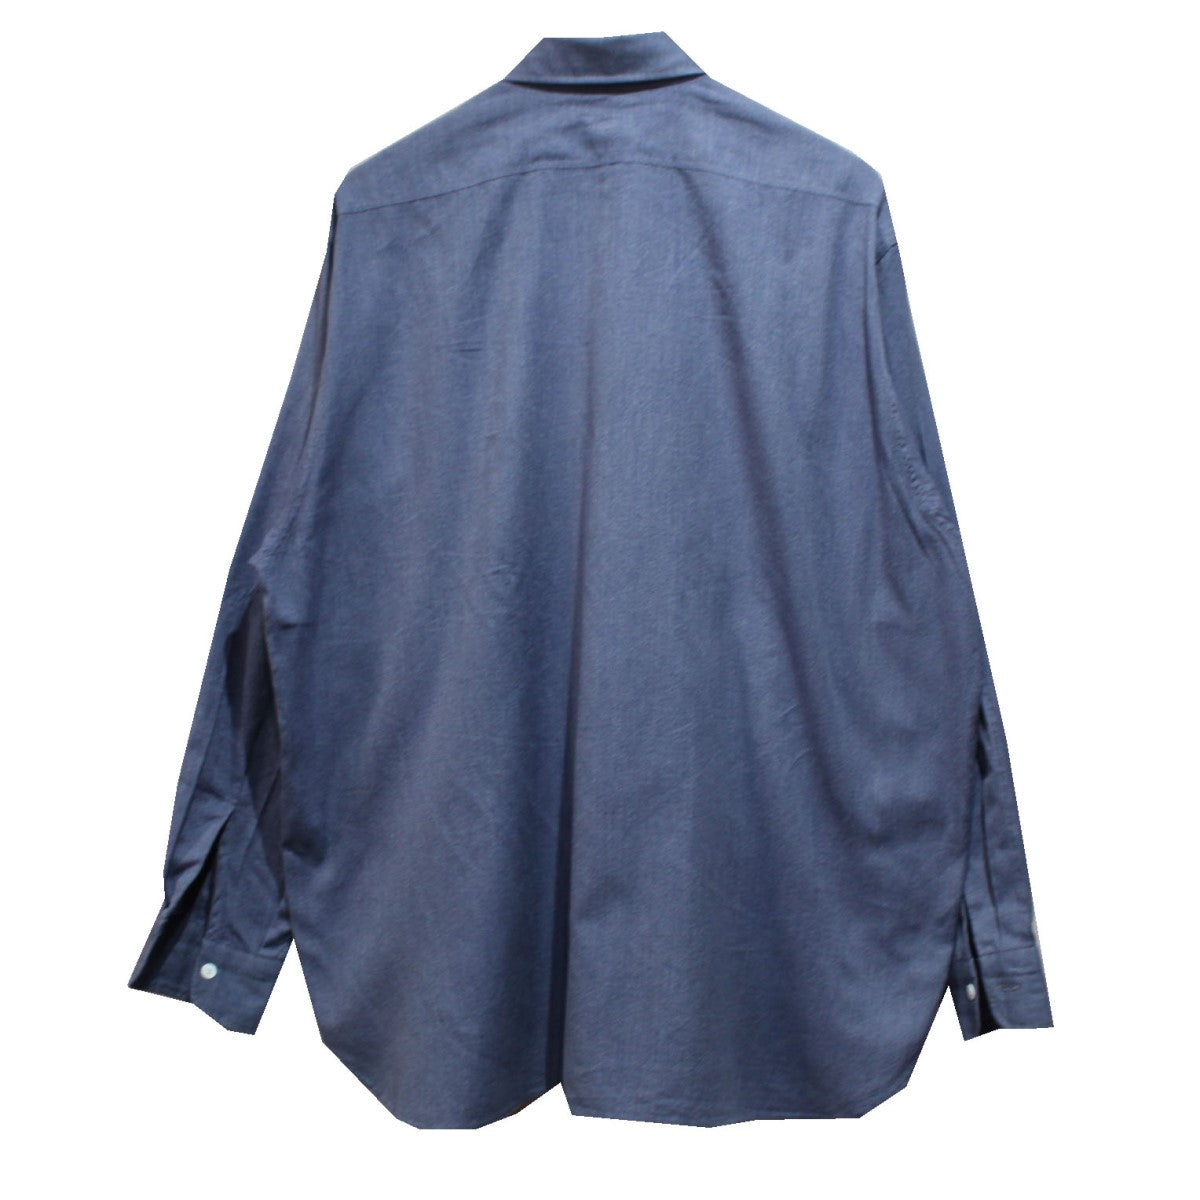 COMOLI(コモリ) 21AWヨリ杢 ワークシャツU03-02005 ブルー サイズ:1 メンズ シャツ 中古・古着